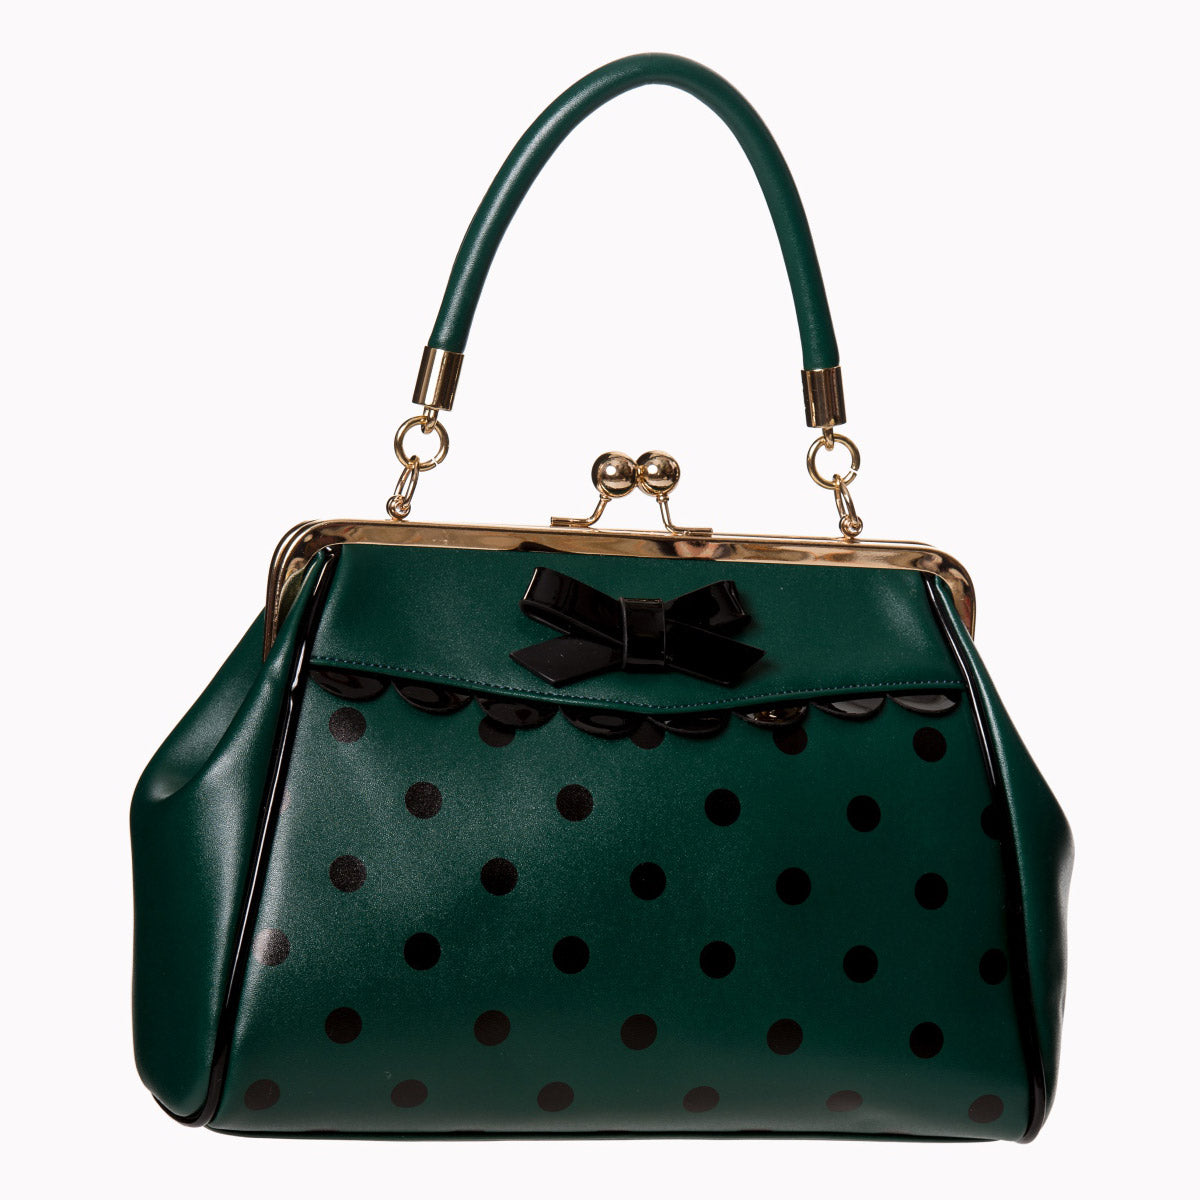 Green and Black Vintage Polka Dot Handbag - Pretty Kitty Fashion